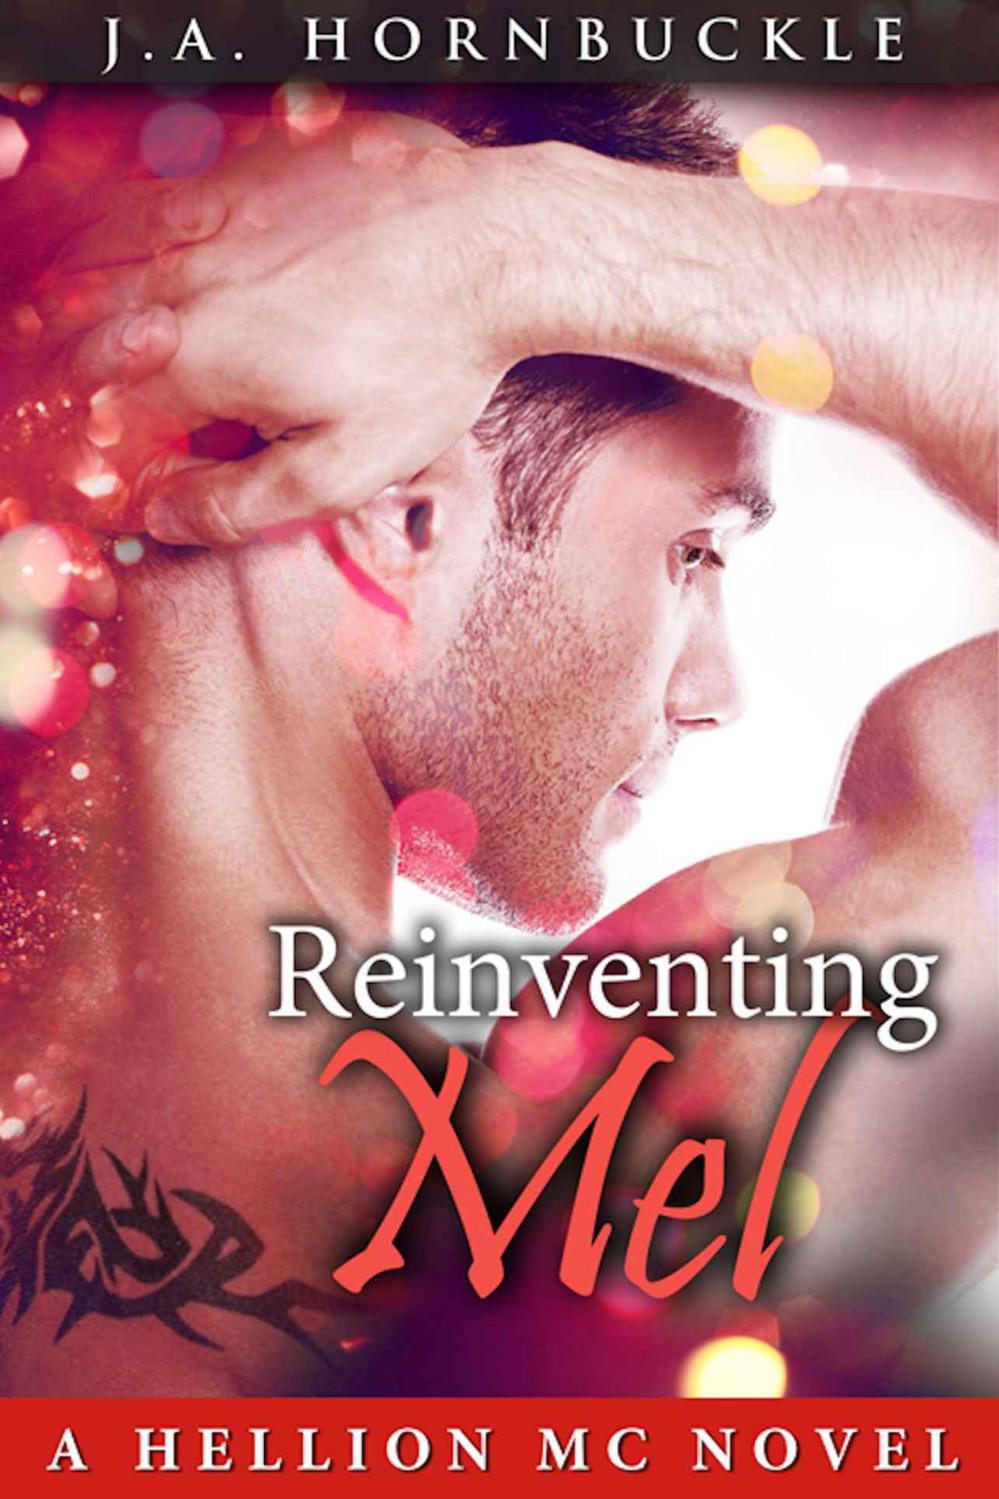 Reinventing Mel: A Hellion MC Novel by J.A. Hornbuckle